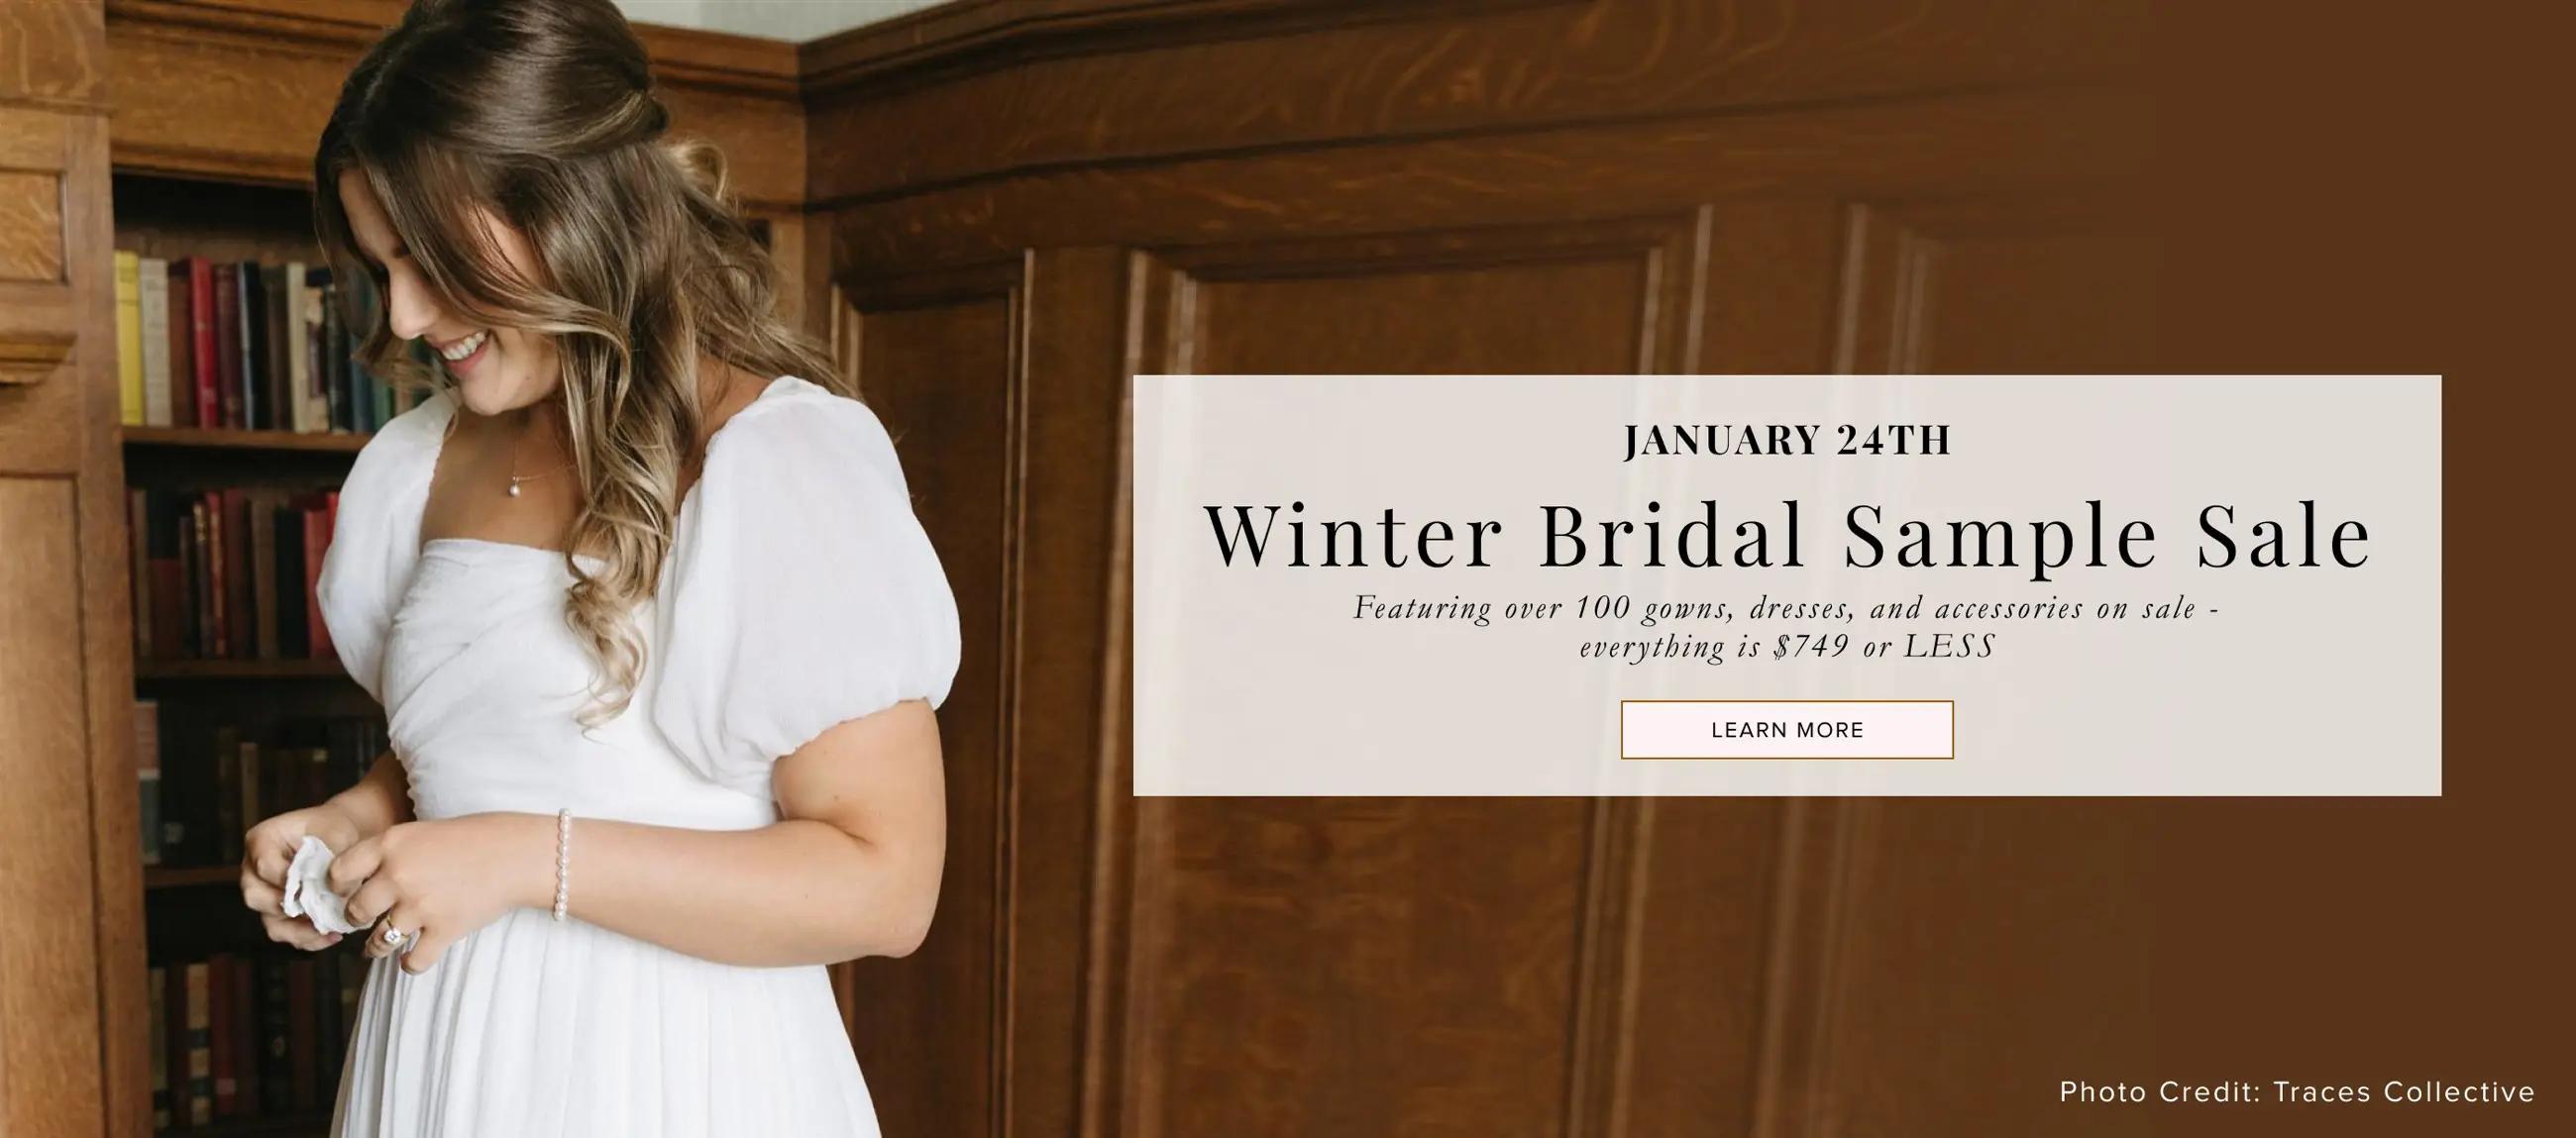 Winter Bridal Sample Sale at Gilded Social in Columbus, OH